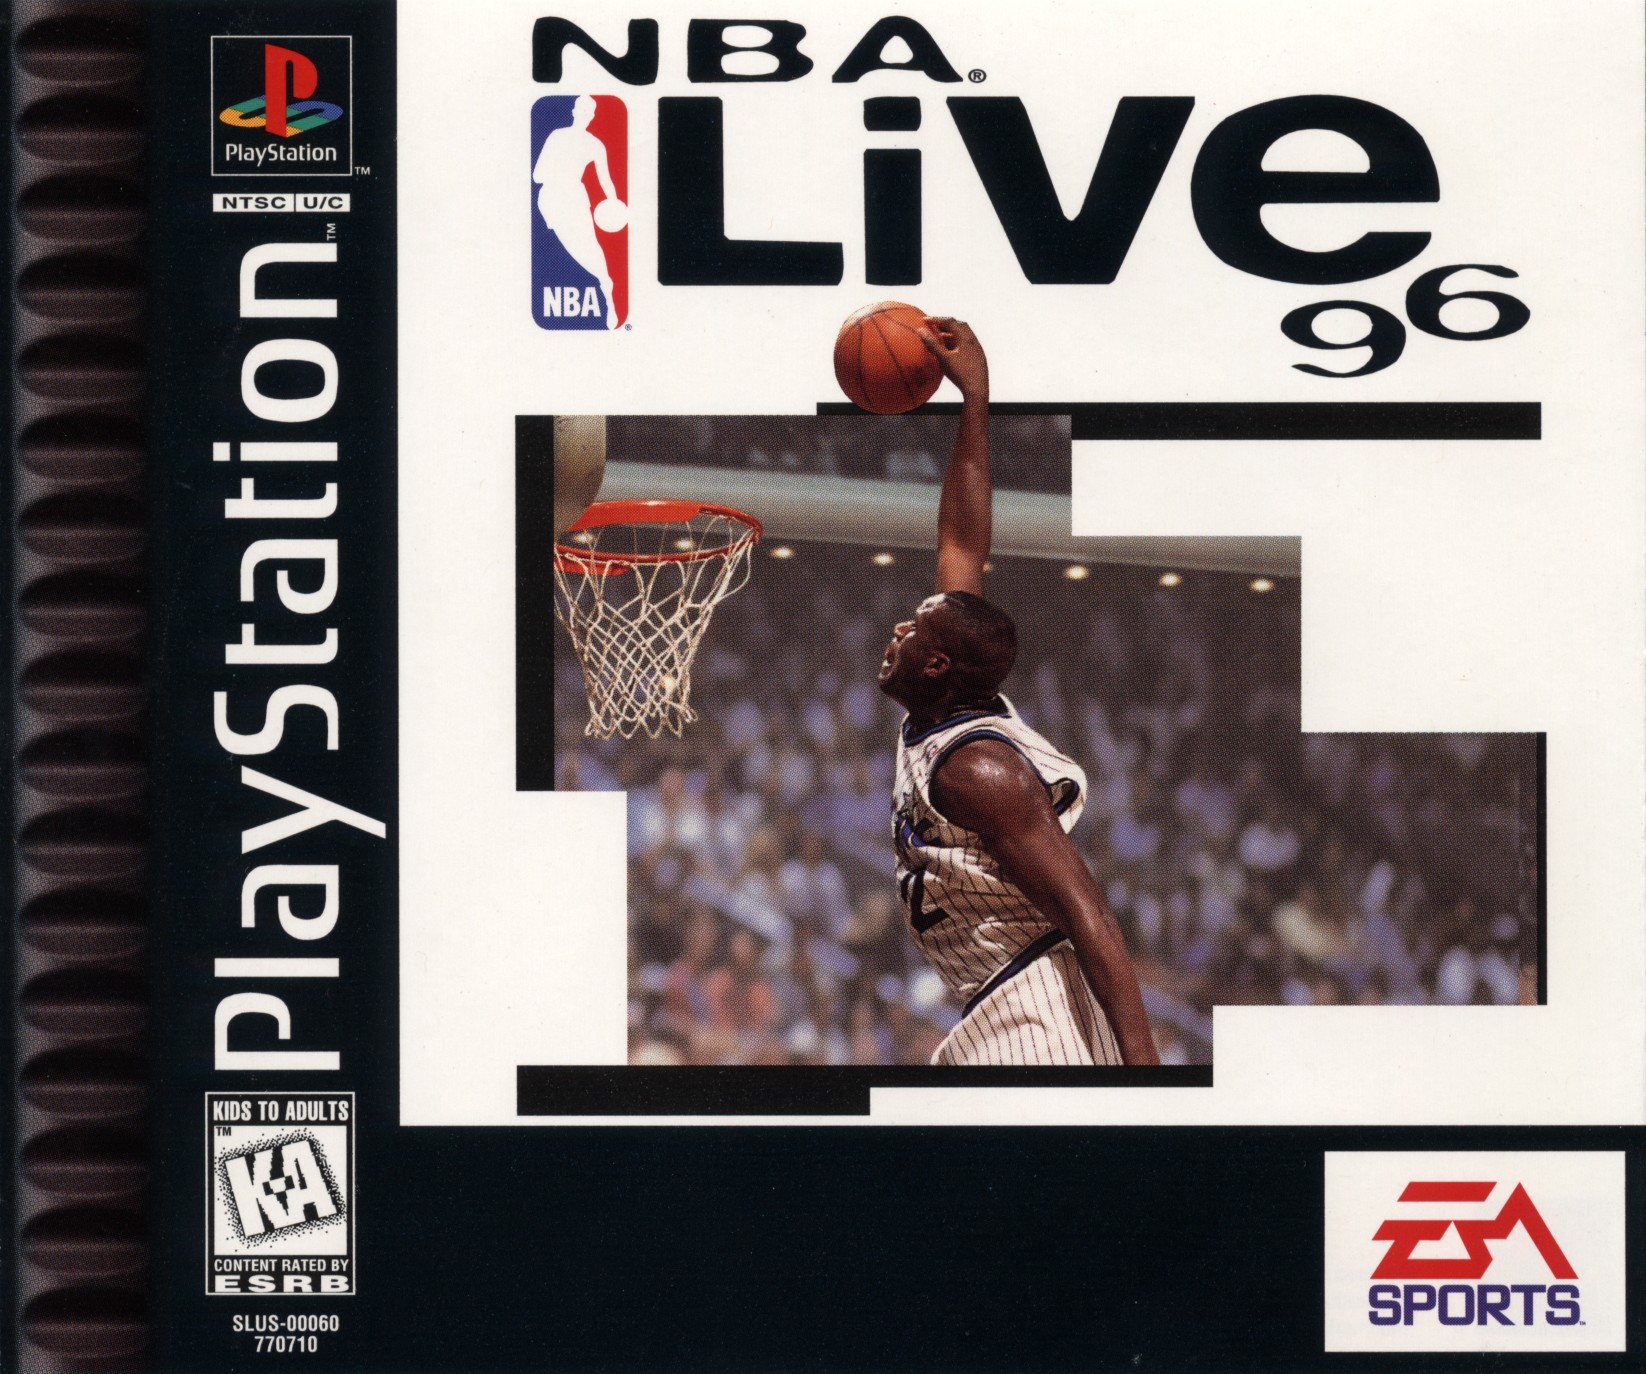 NBA Live 96 Images